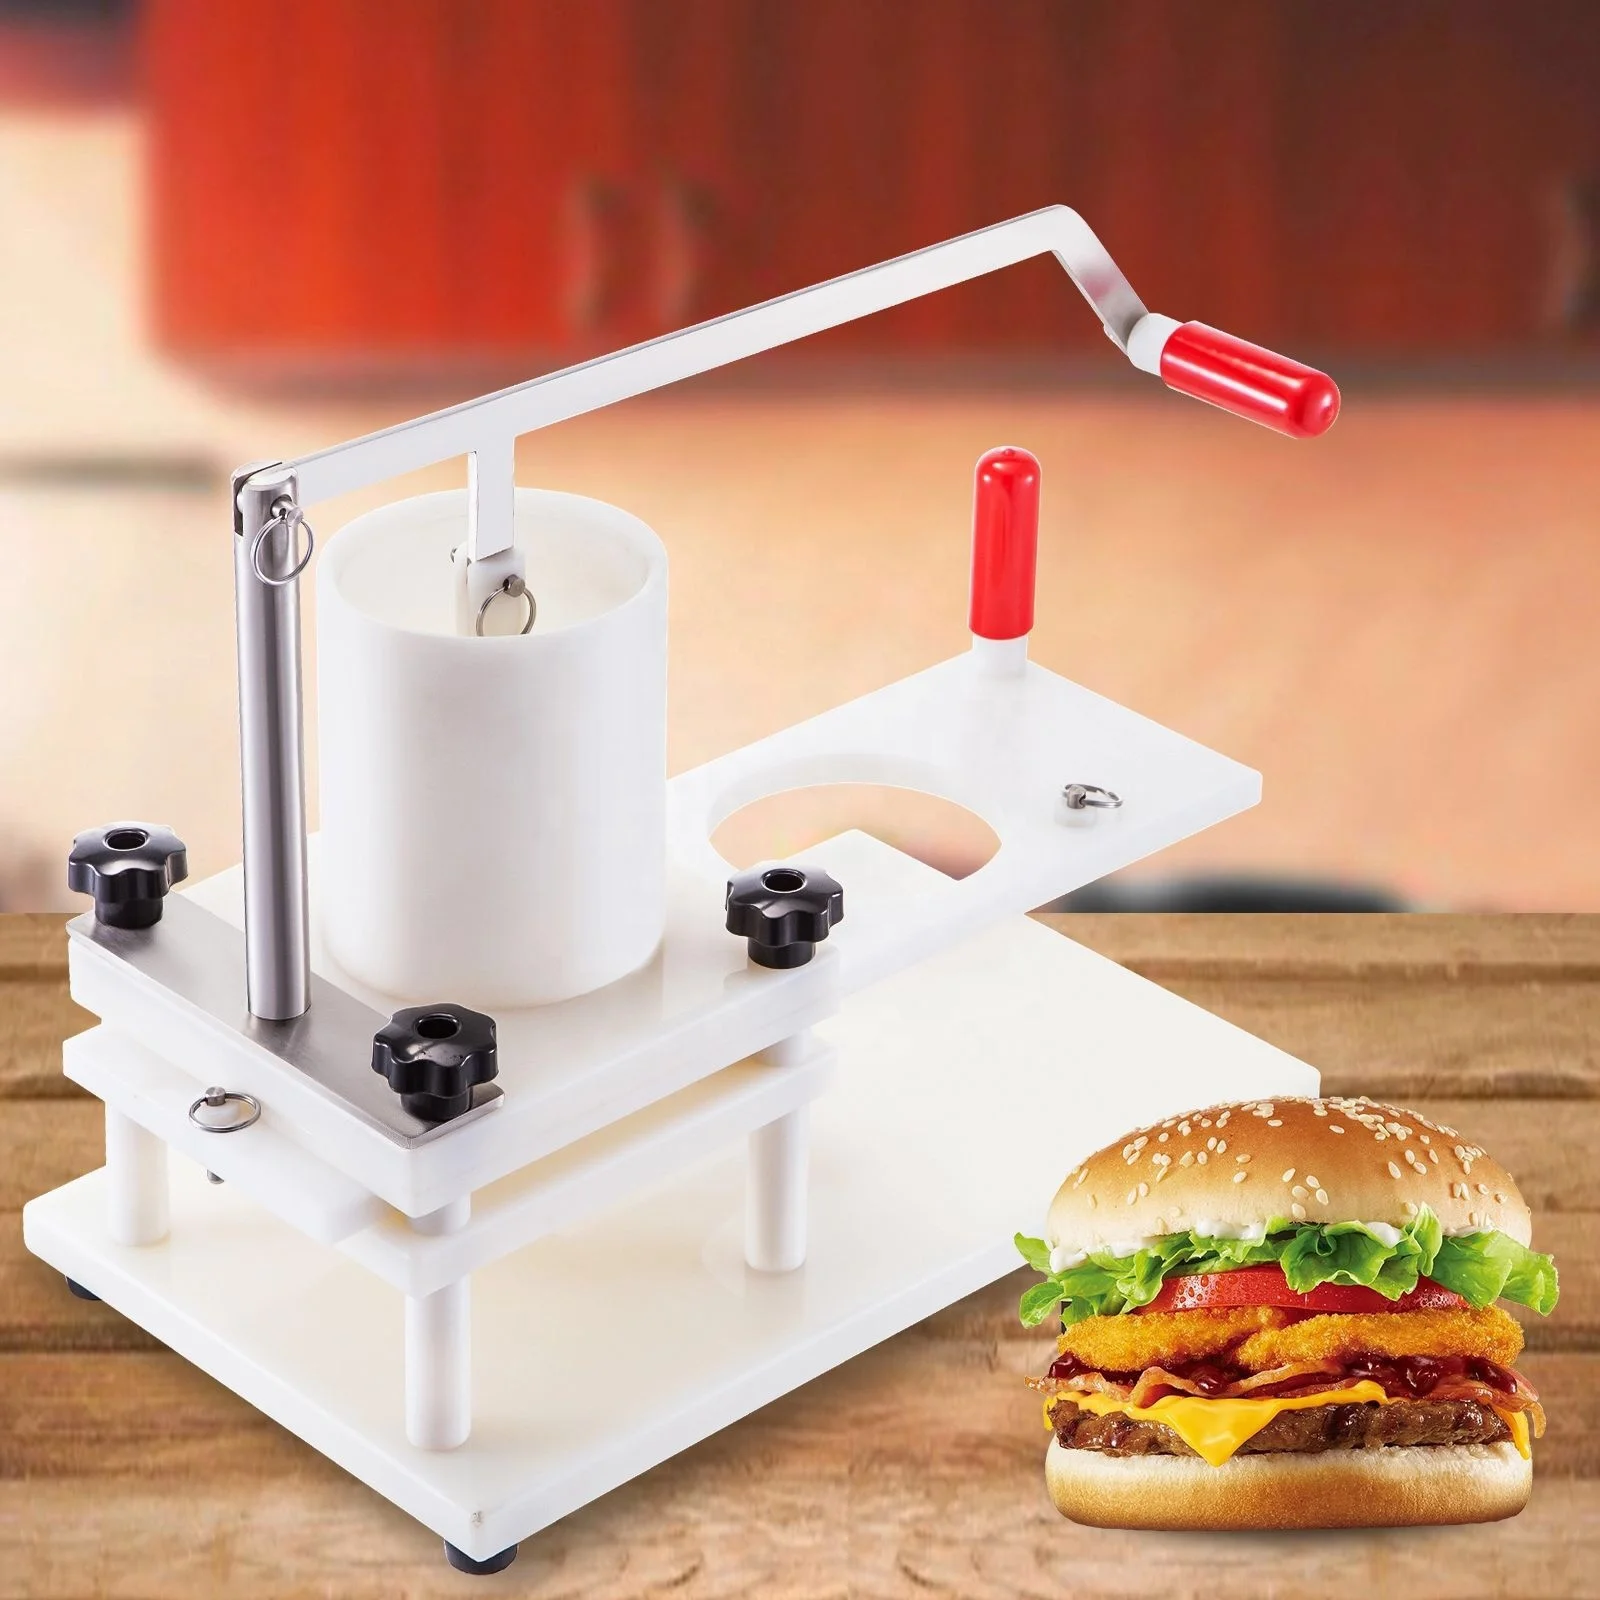 Easybuy Hamburger Patty Machine 130MM/5.1 Inch Diameter Commercial Hamburger Press Maker Durable Manual Burger Forming Machine Burger Press Tool 